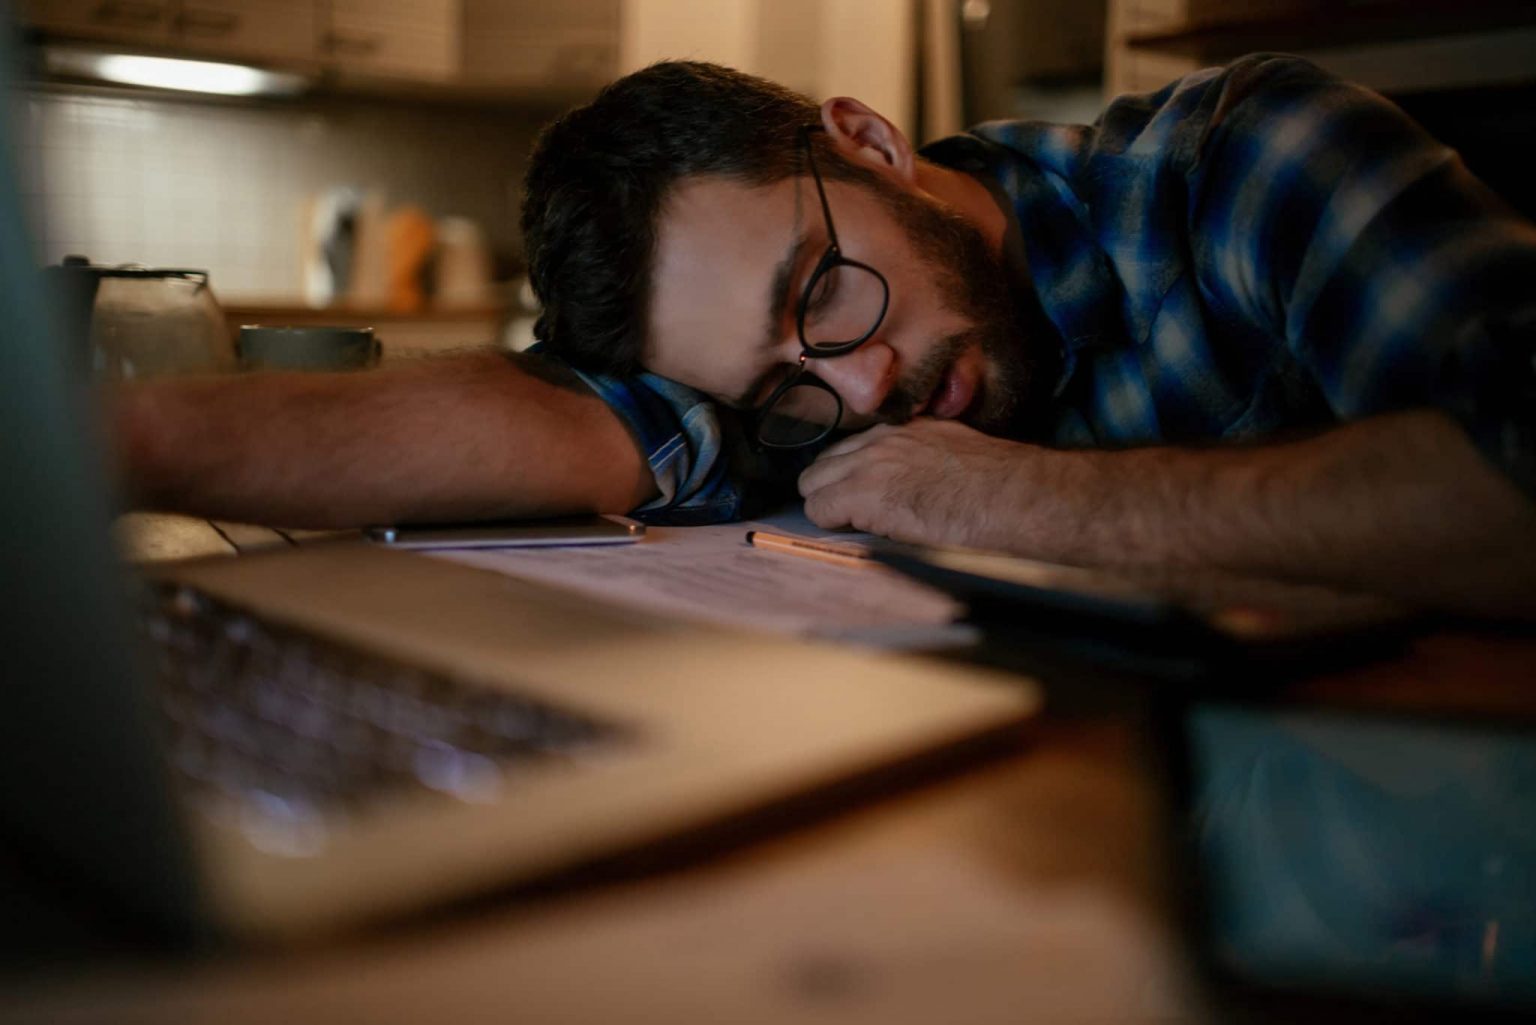 A man asleep at desk experiencing narcolepsy.